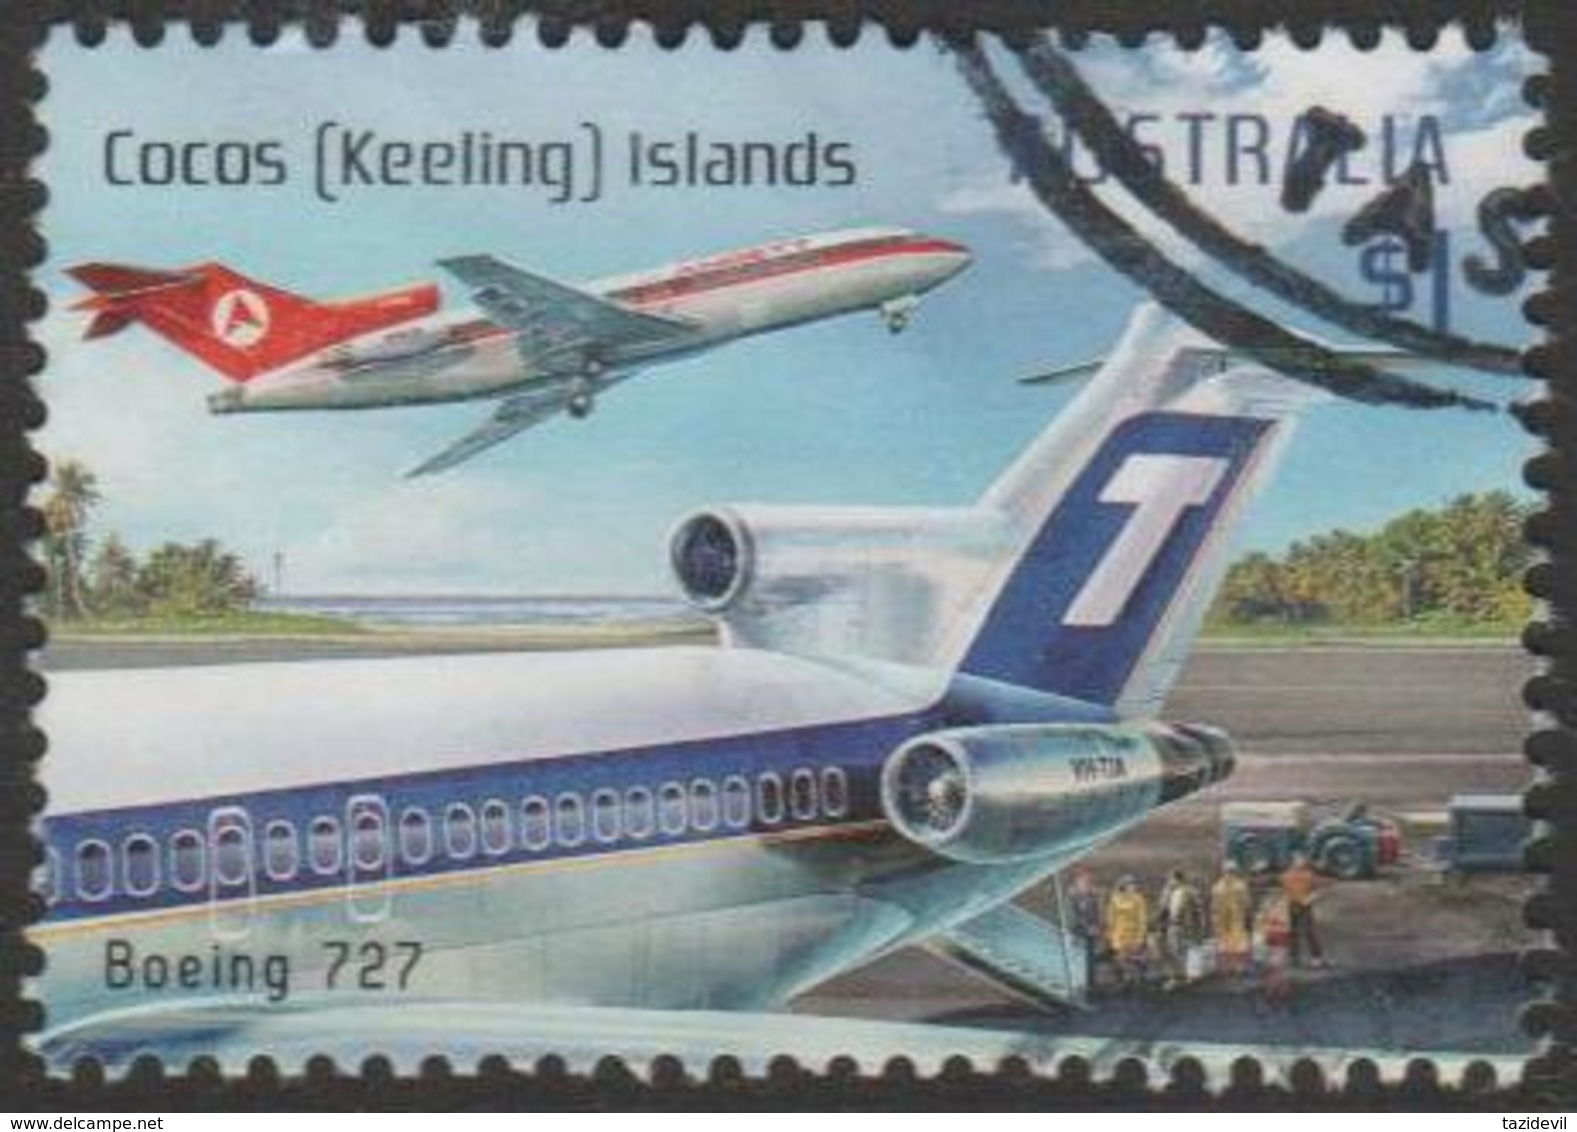 COCOS (KEELING) ISLANDS - USED 2017 $1.00 Aviation - Boeing 727 - Aircraft - Cocos (Keeling) Islands